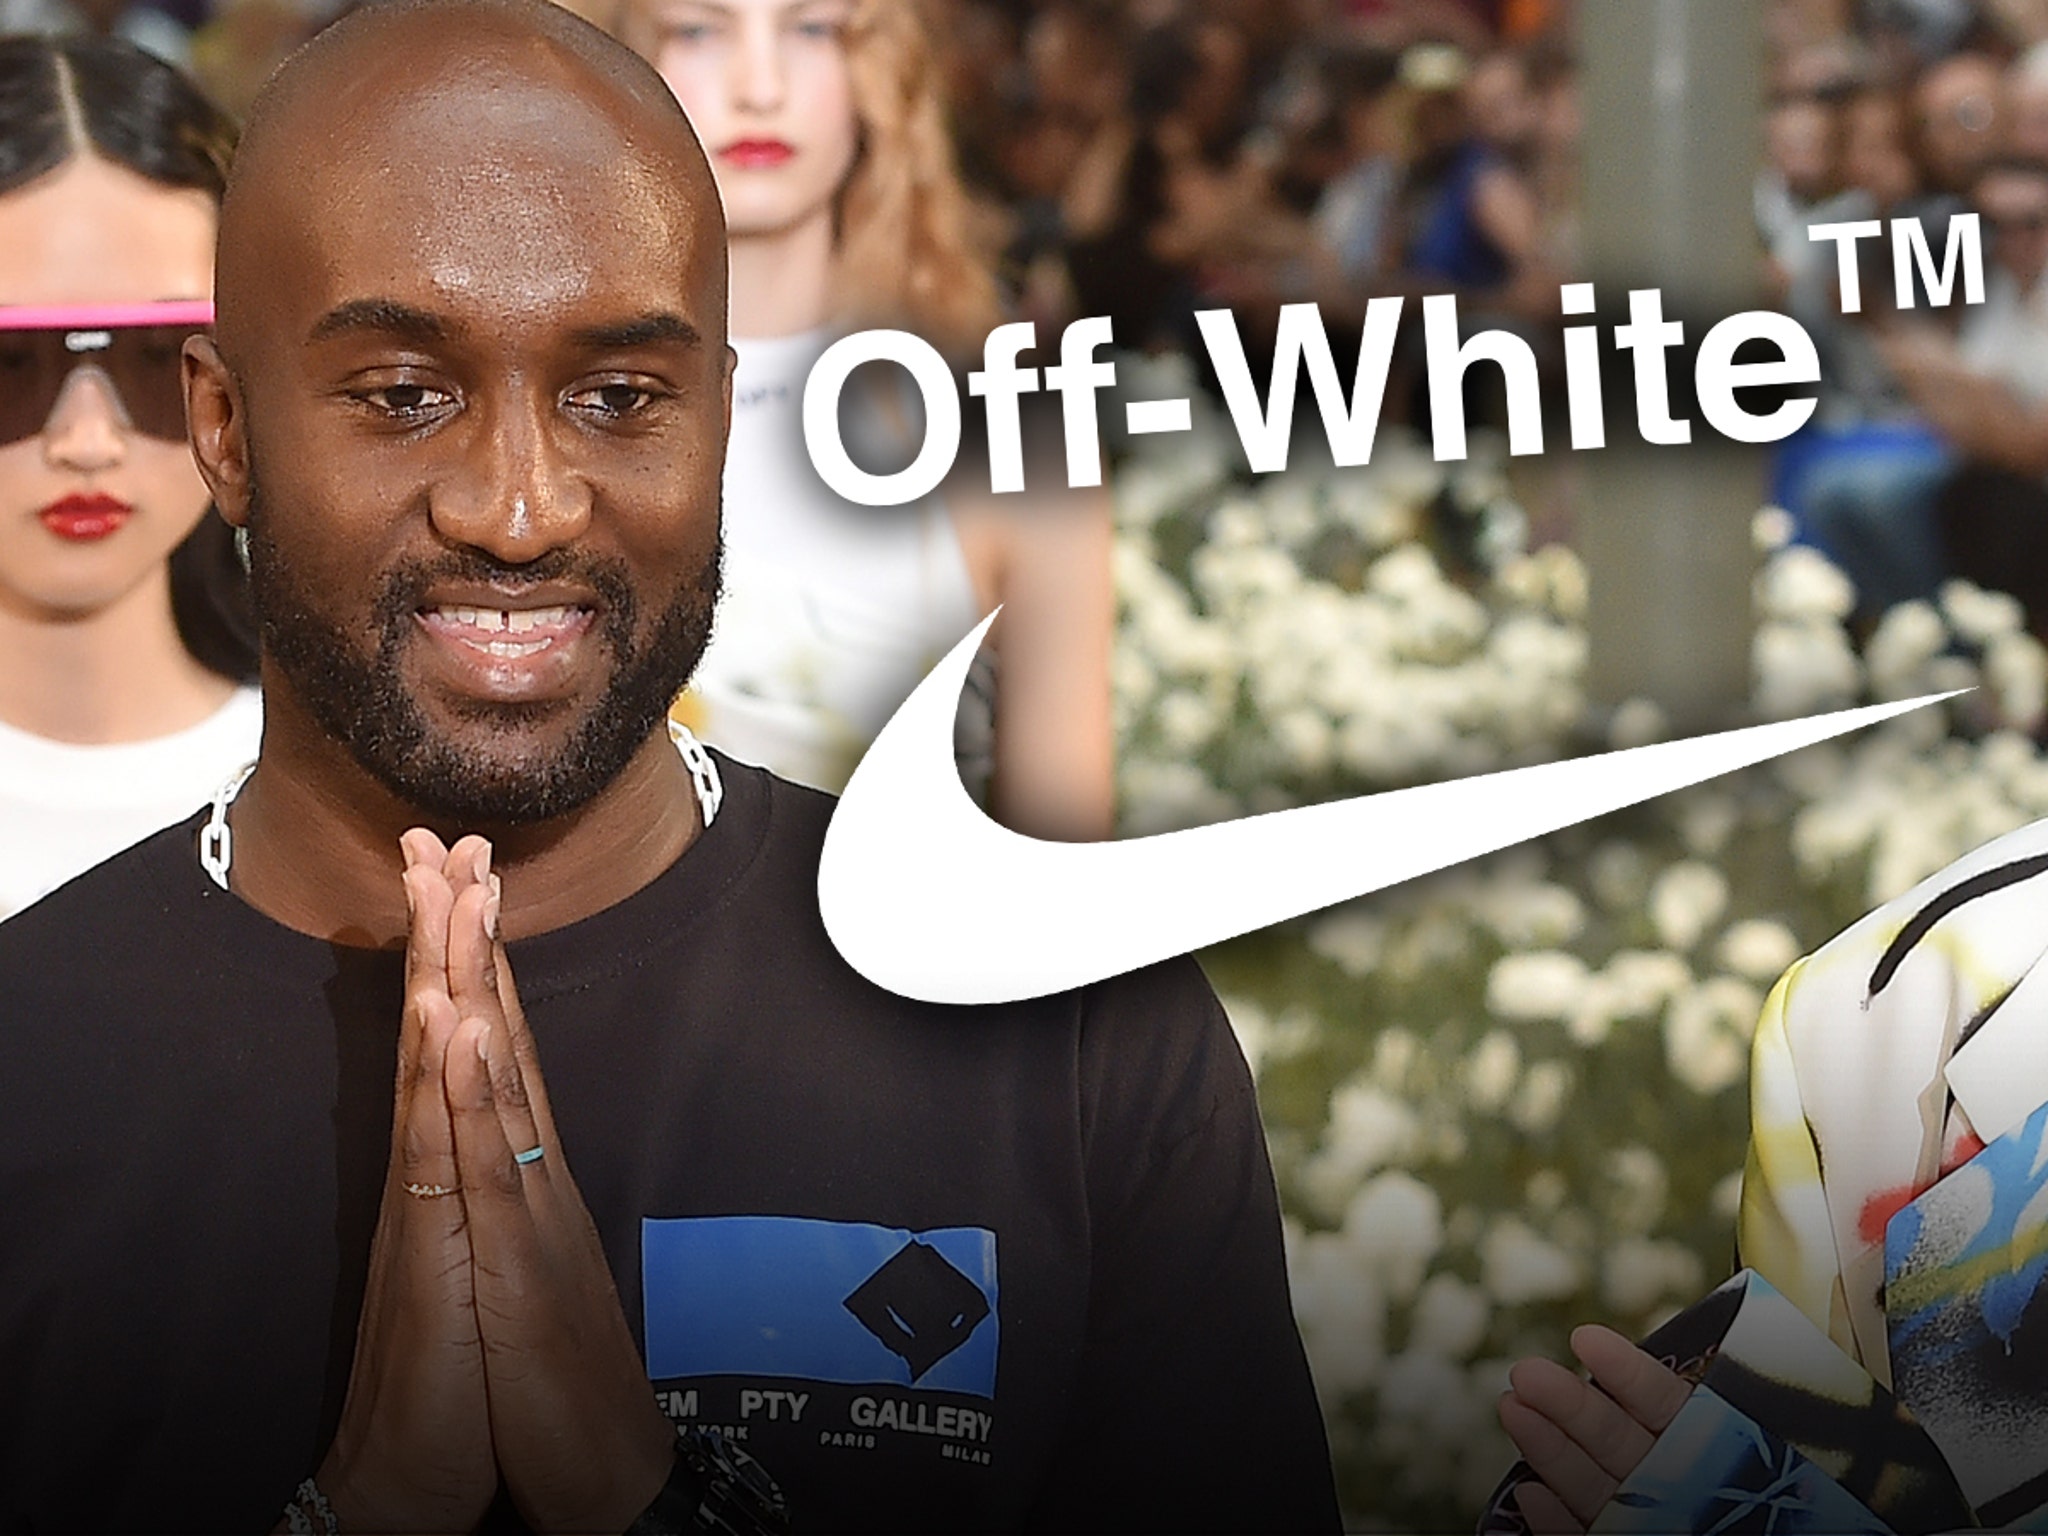 Virgil Abloh's Off-White x Nike Blazer Low Collab Shoe: Release